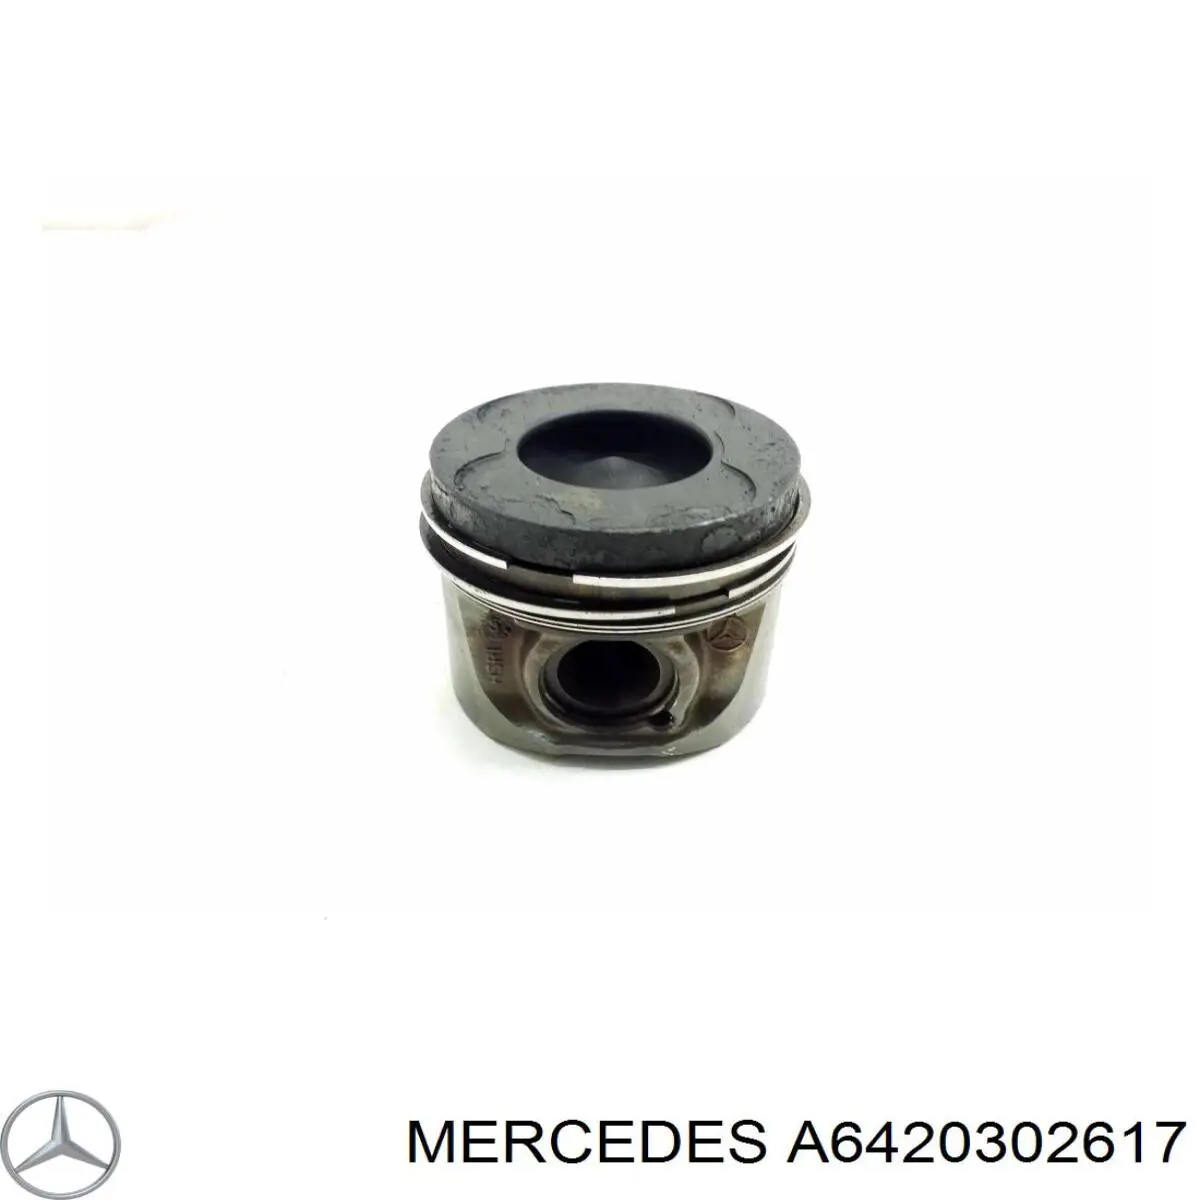 Поршень в комплекте на 1 цилиндр, STD Mercedes A6420302617